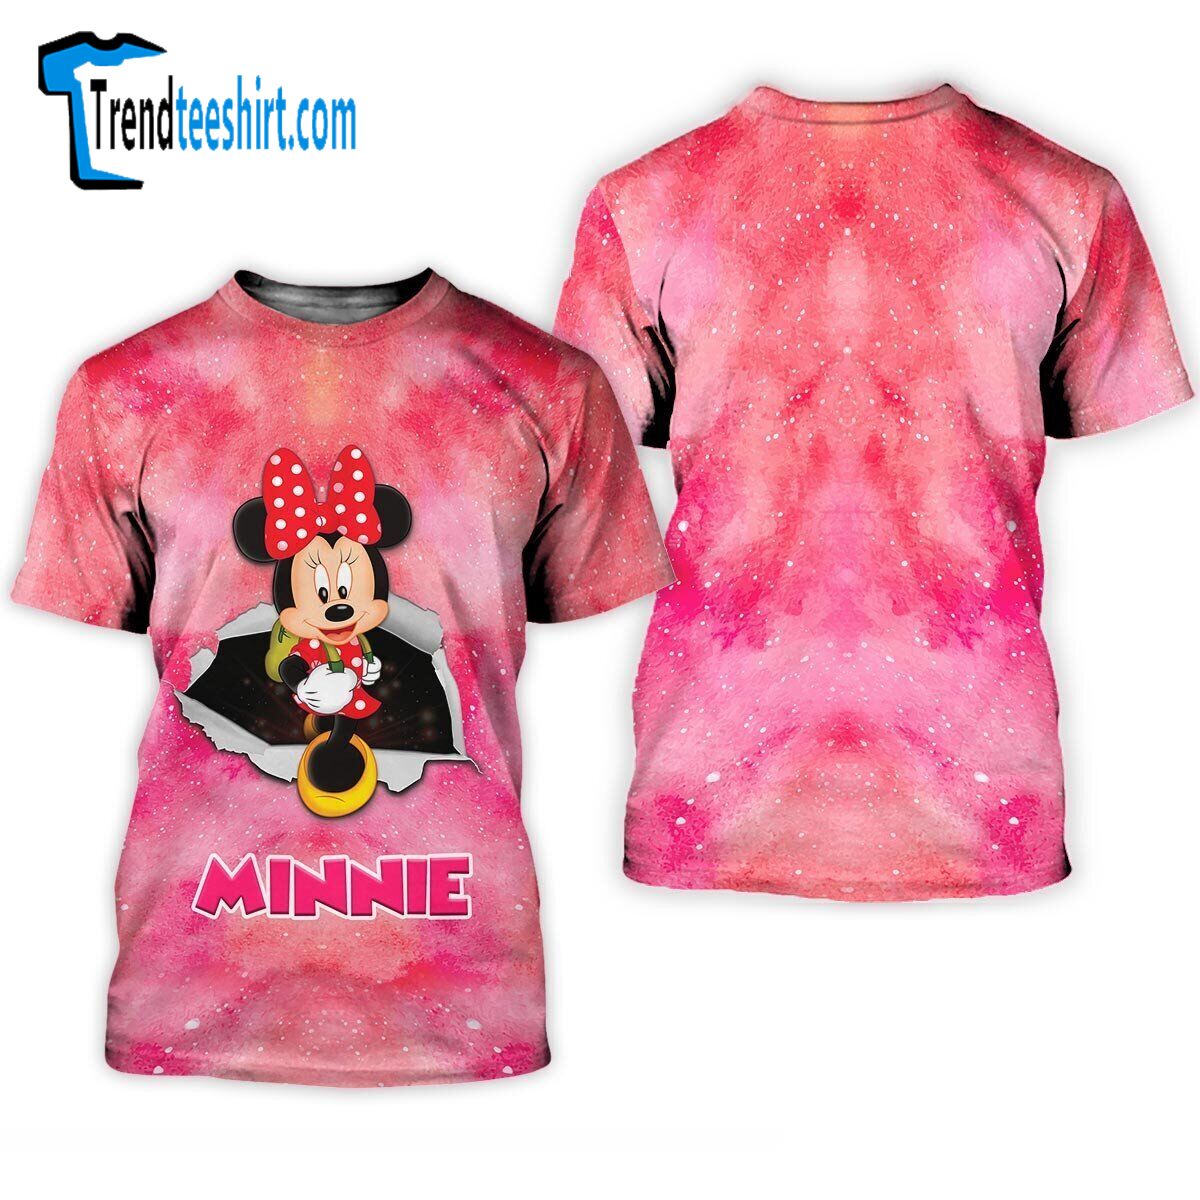 Minnie Cracking Galaxy Pattern Mother's Day Birthday Tshirt 3d Printed